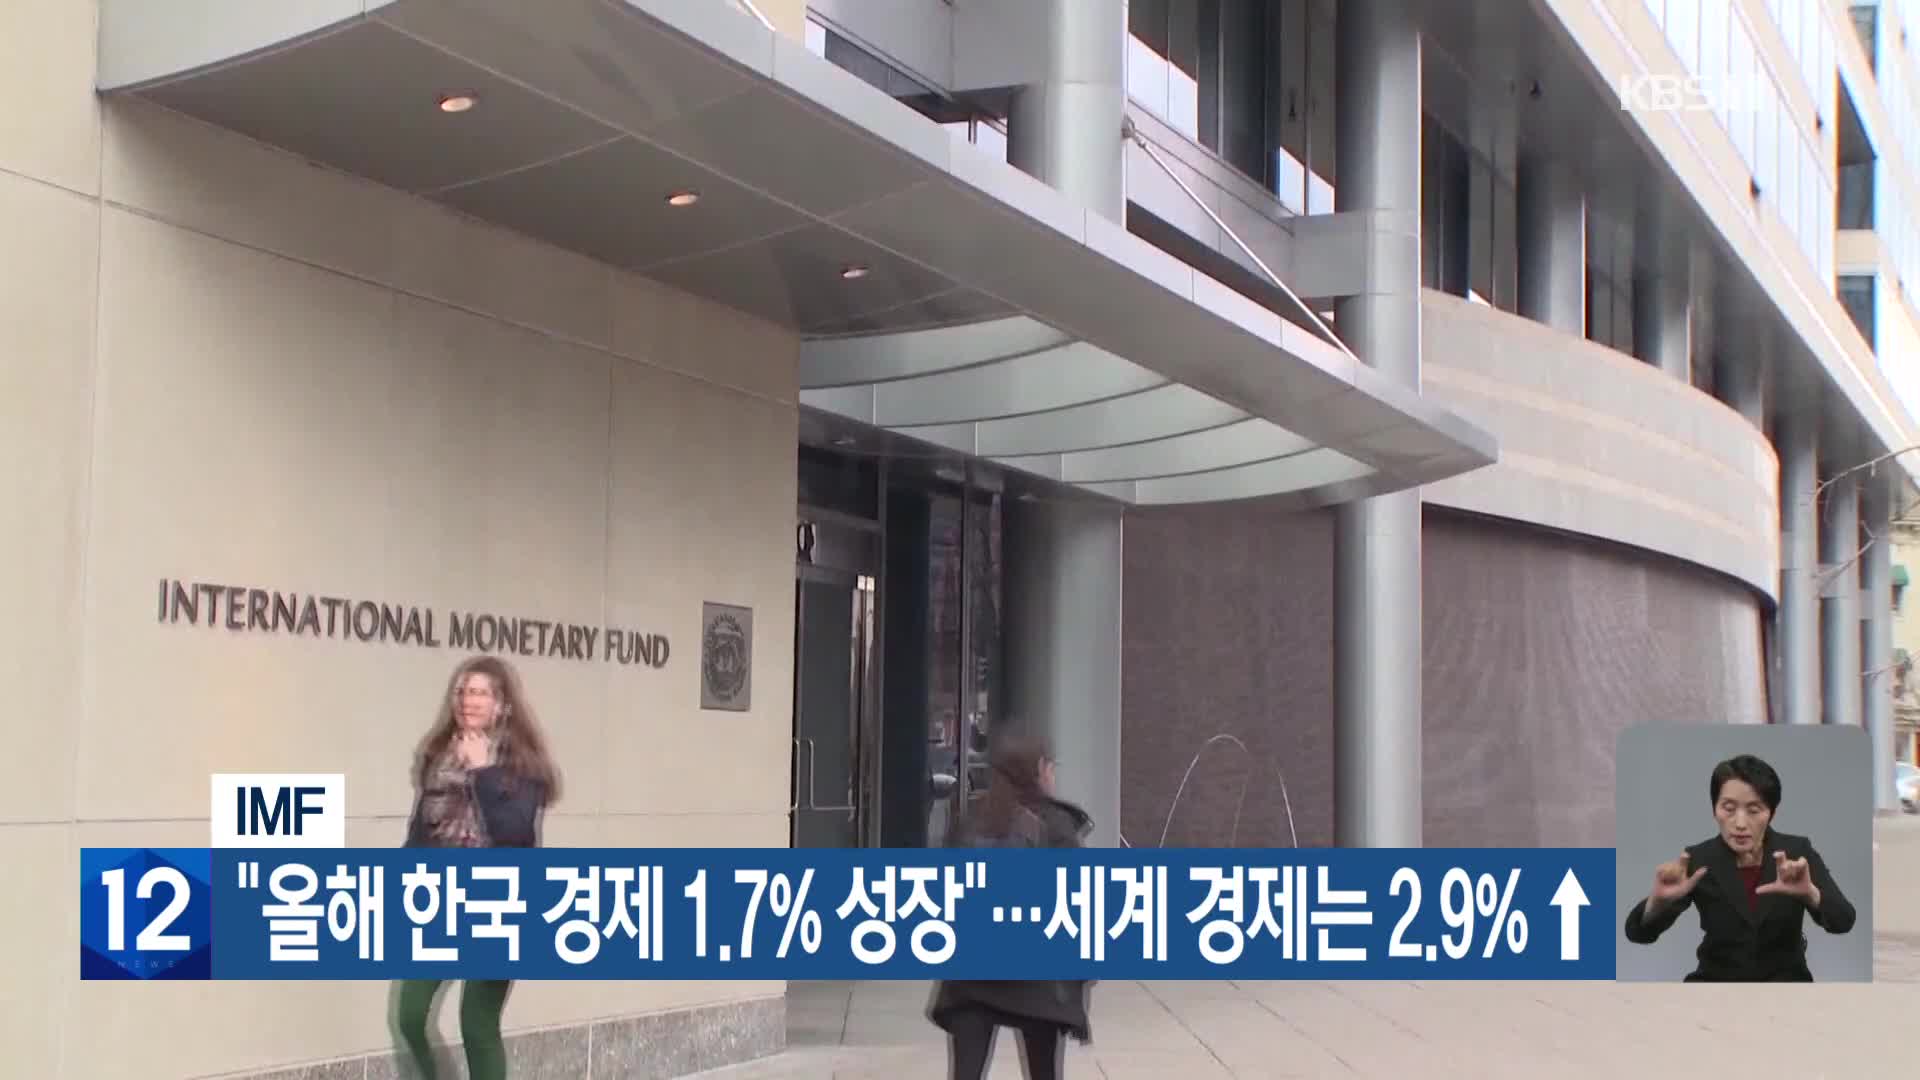 IMF “올해 한국 경제 1.7% 성장”…세계 경제는 2.9%↑